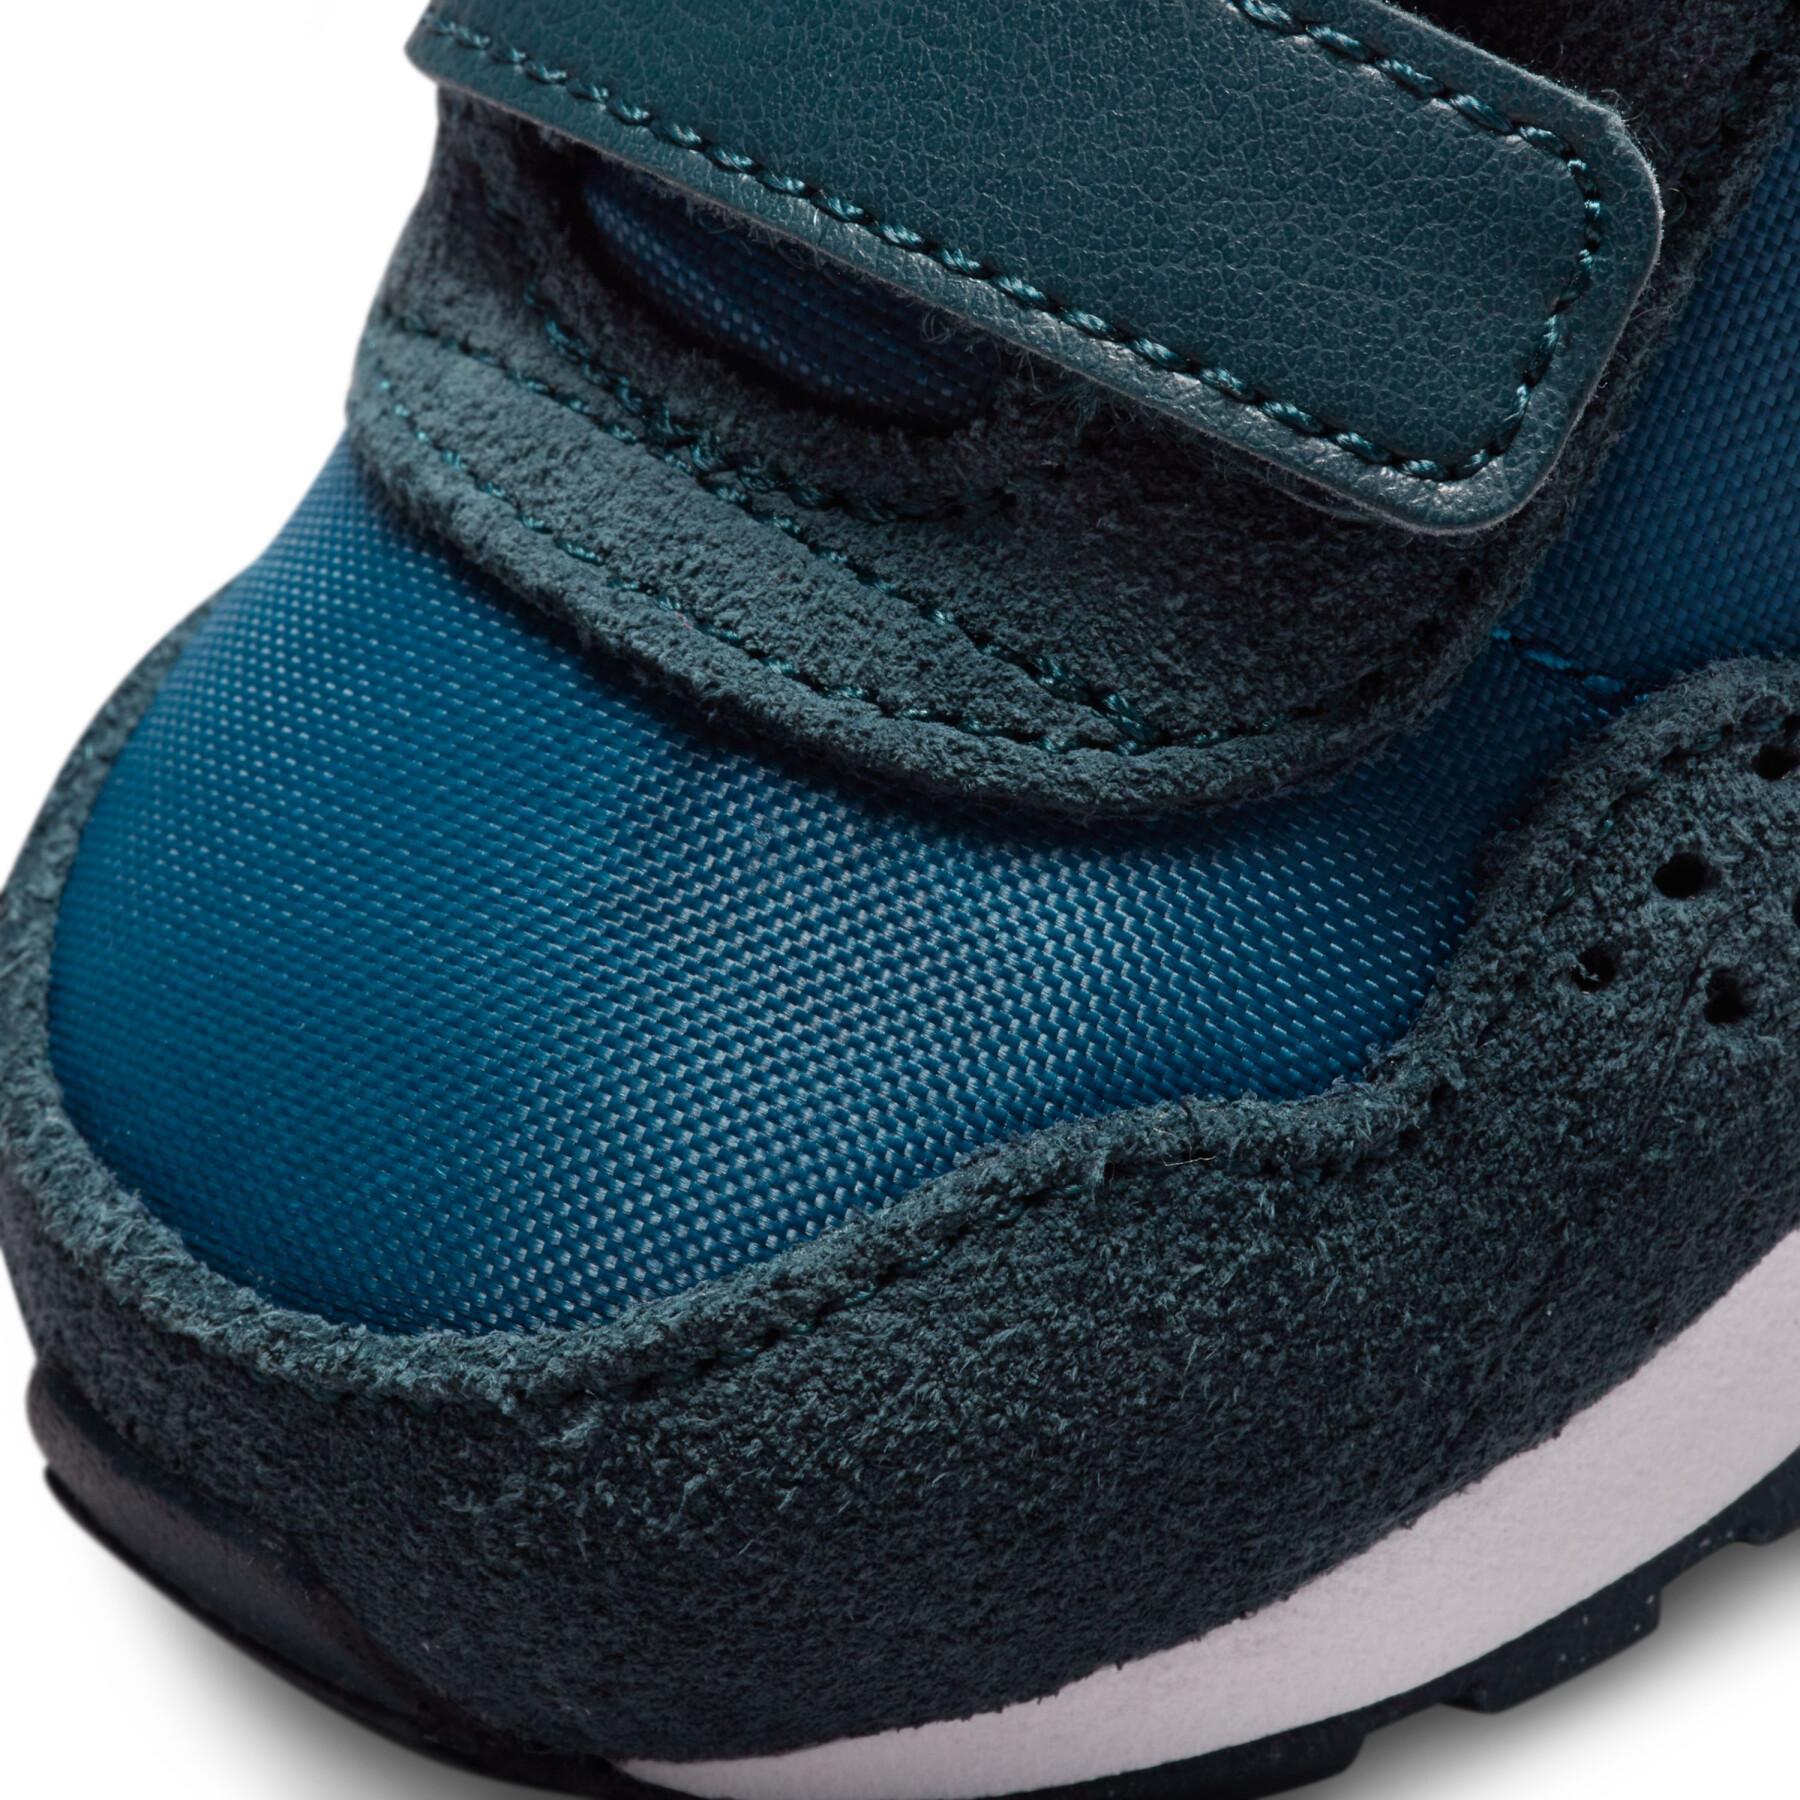 Baby sneakers Nike Md Valiant